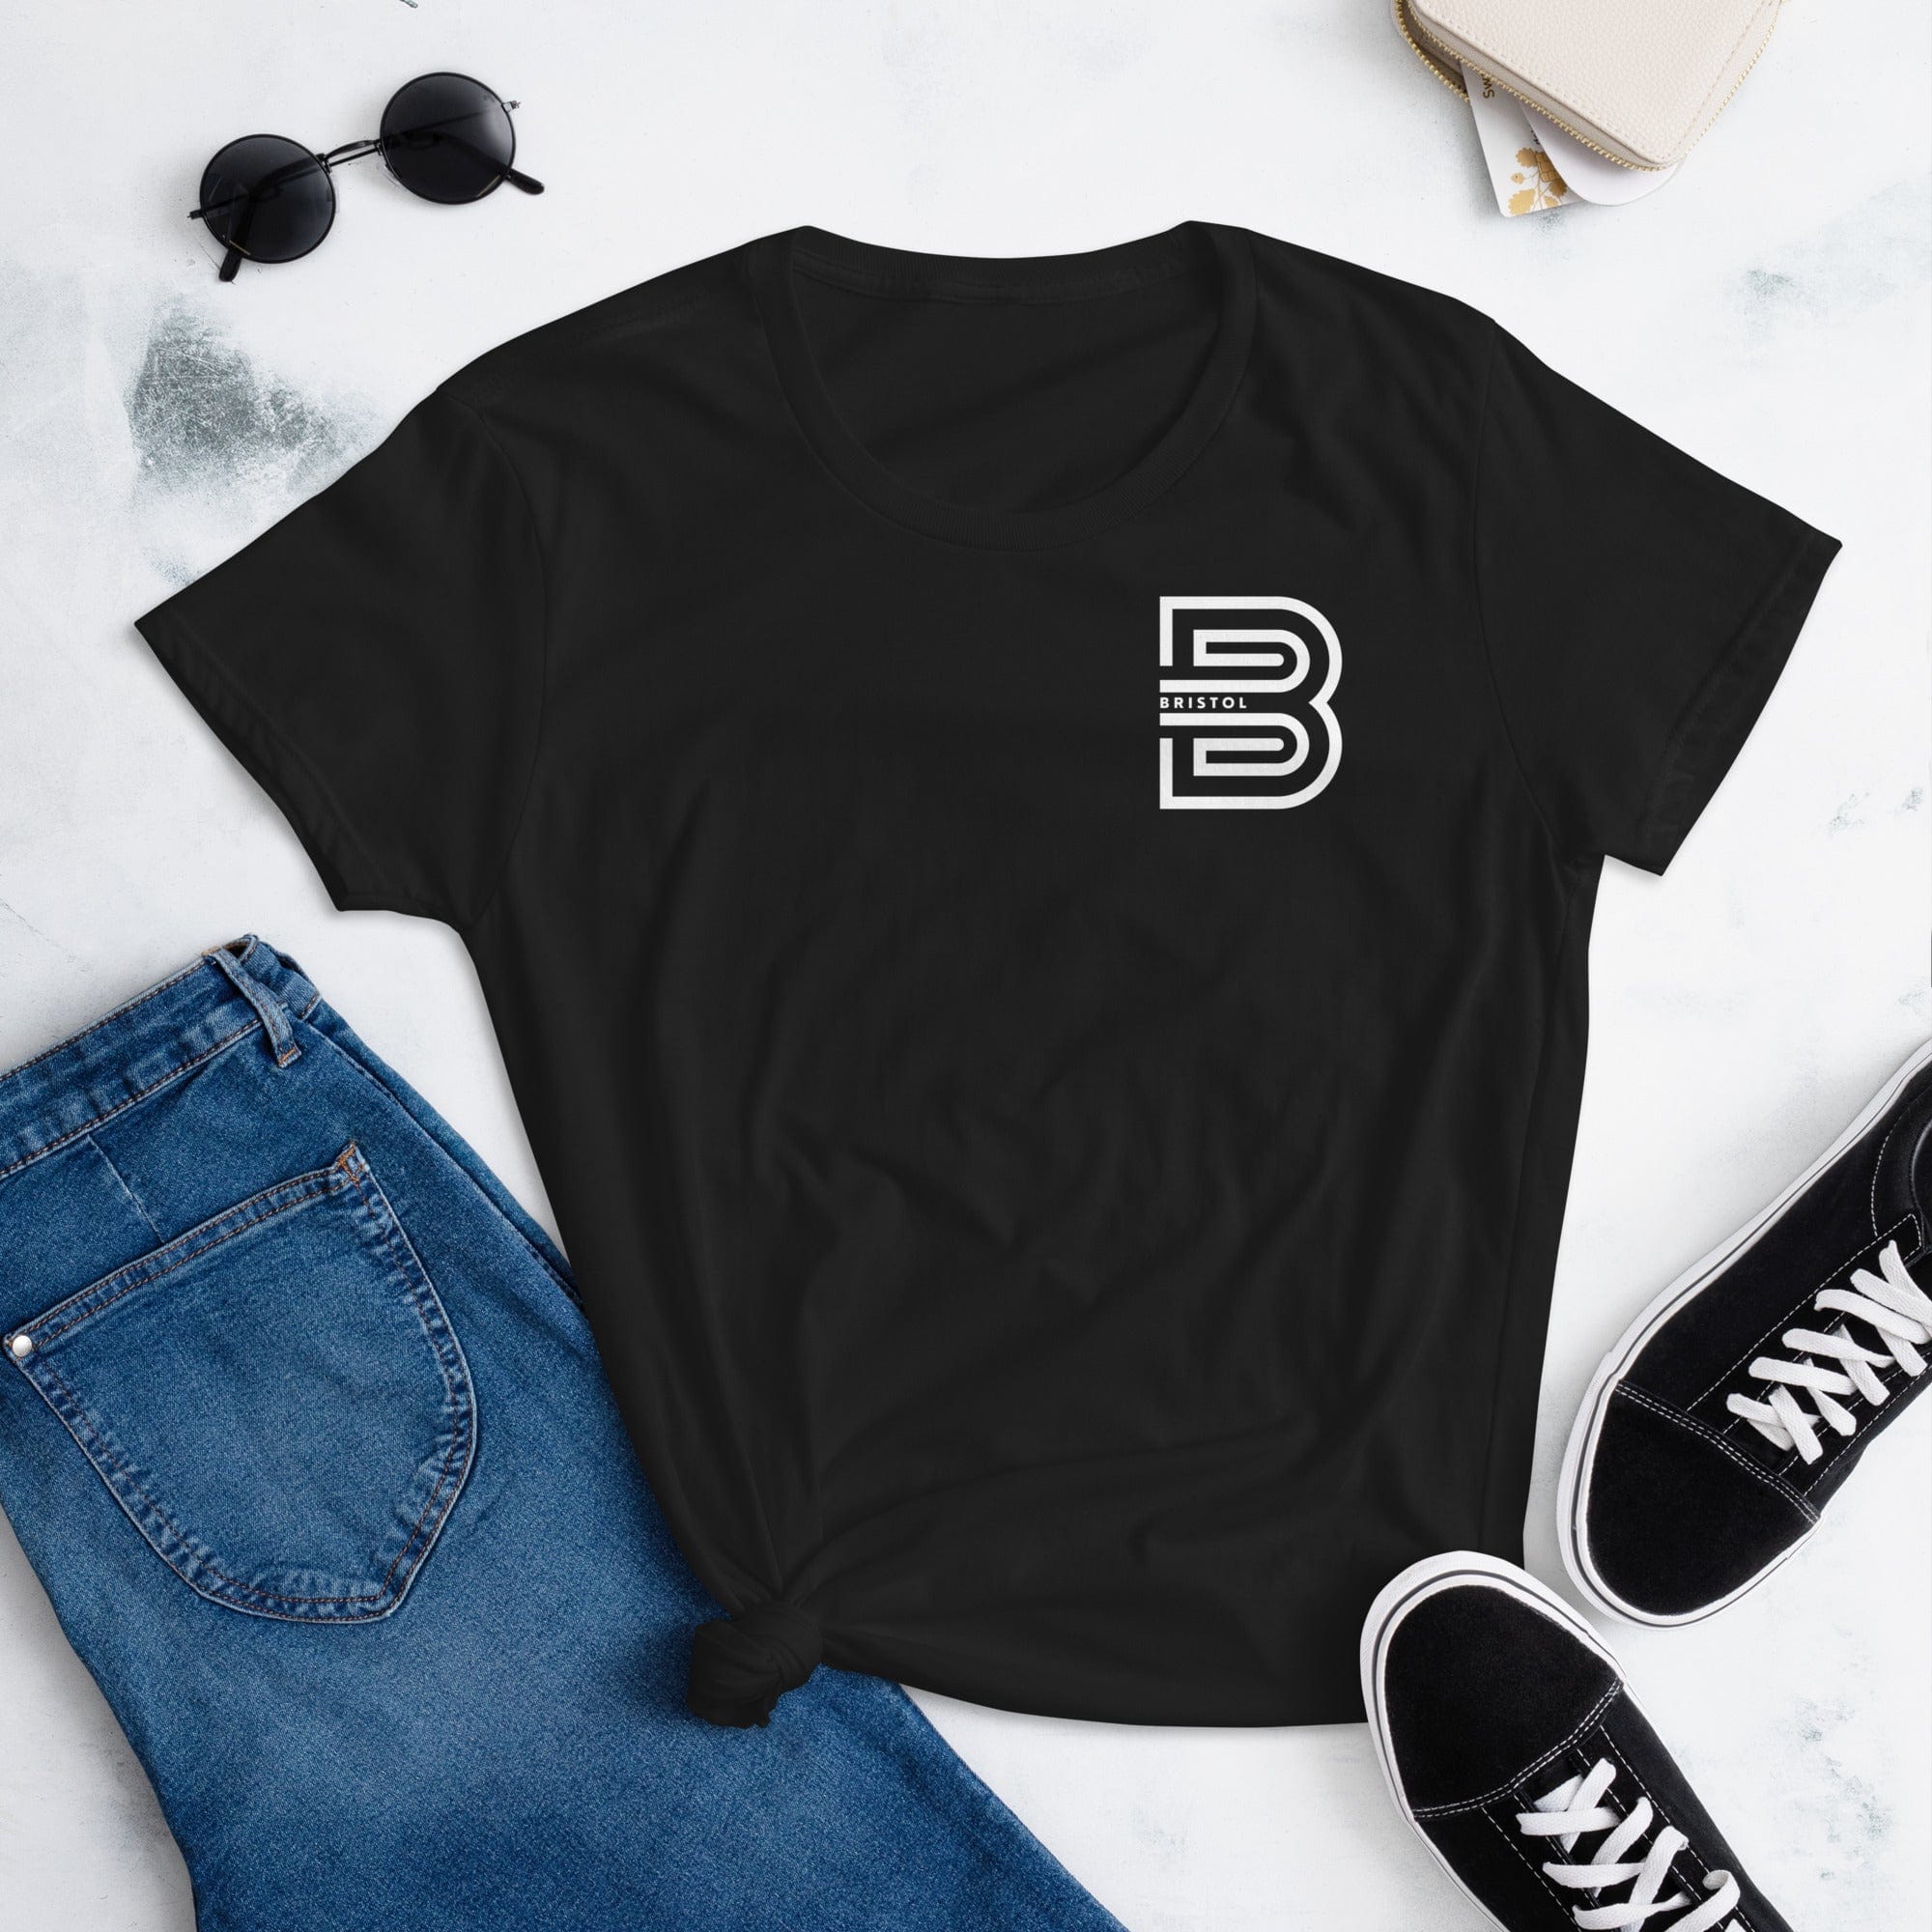 Bristol B Women's T-shirt Black / S Shirts & Tops Jolly & Goode